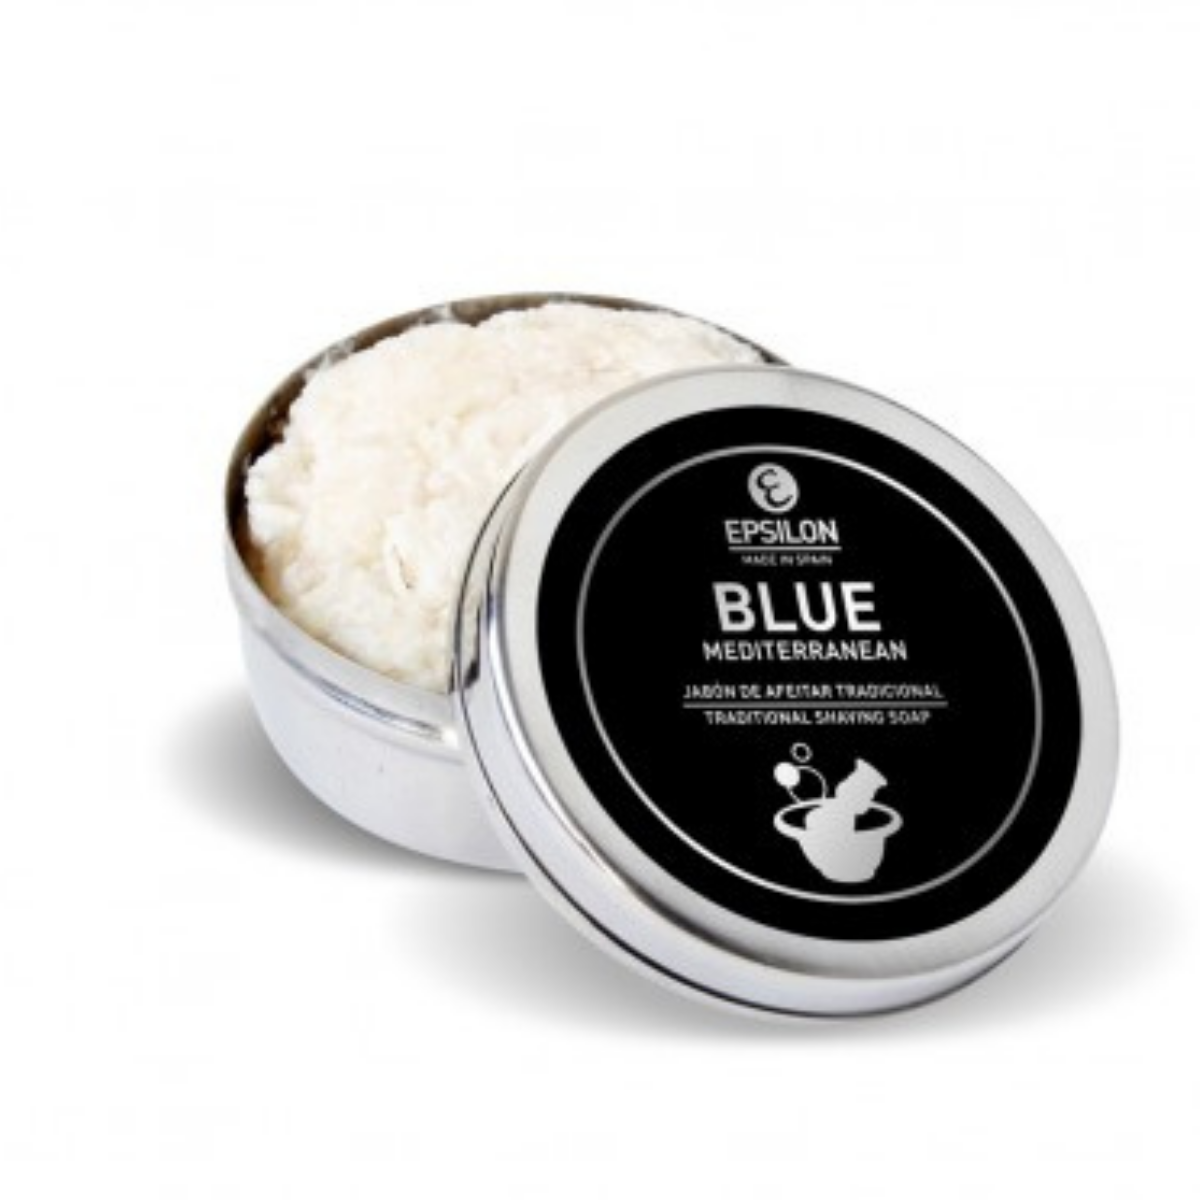 Primary image of Blue Mediterranean Shaving Soap